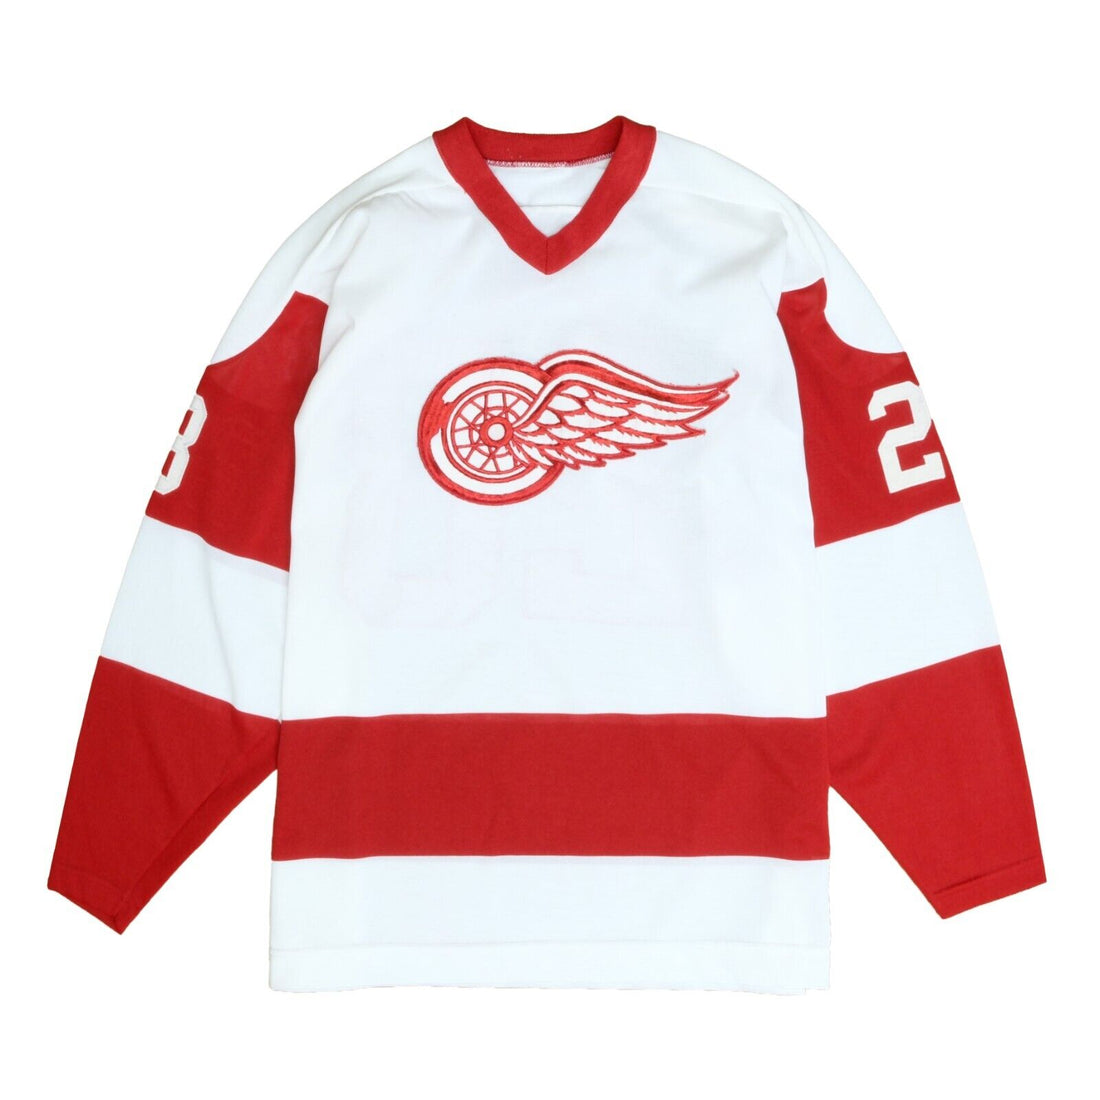 Vintage Detroit Red Wings Hockey Jersey Size Medium 80s NHL